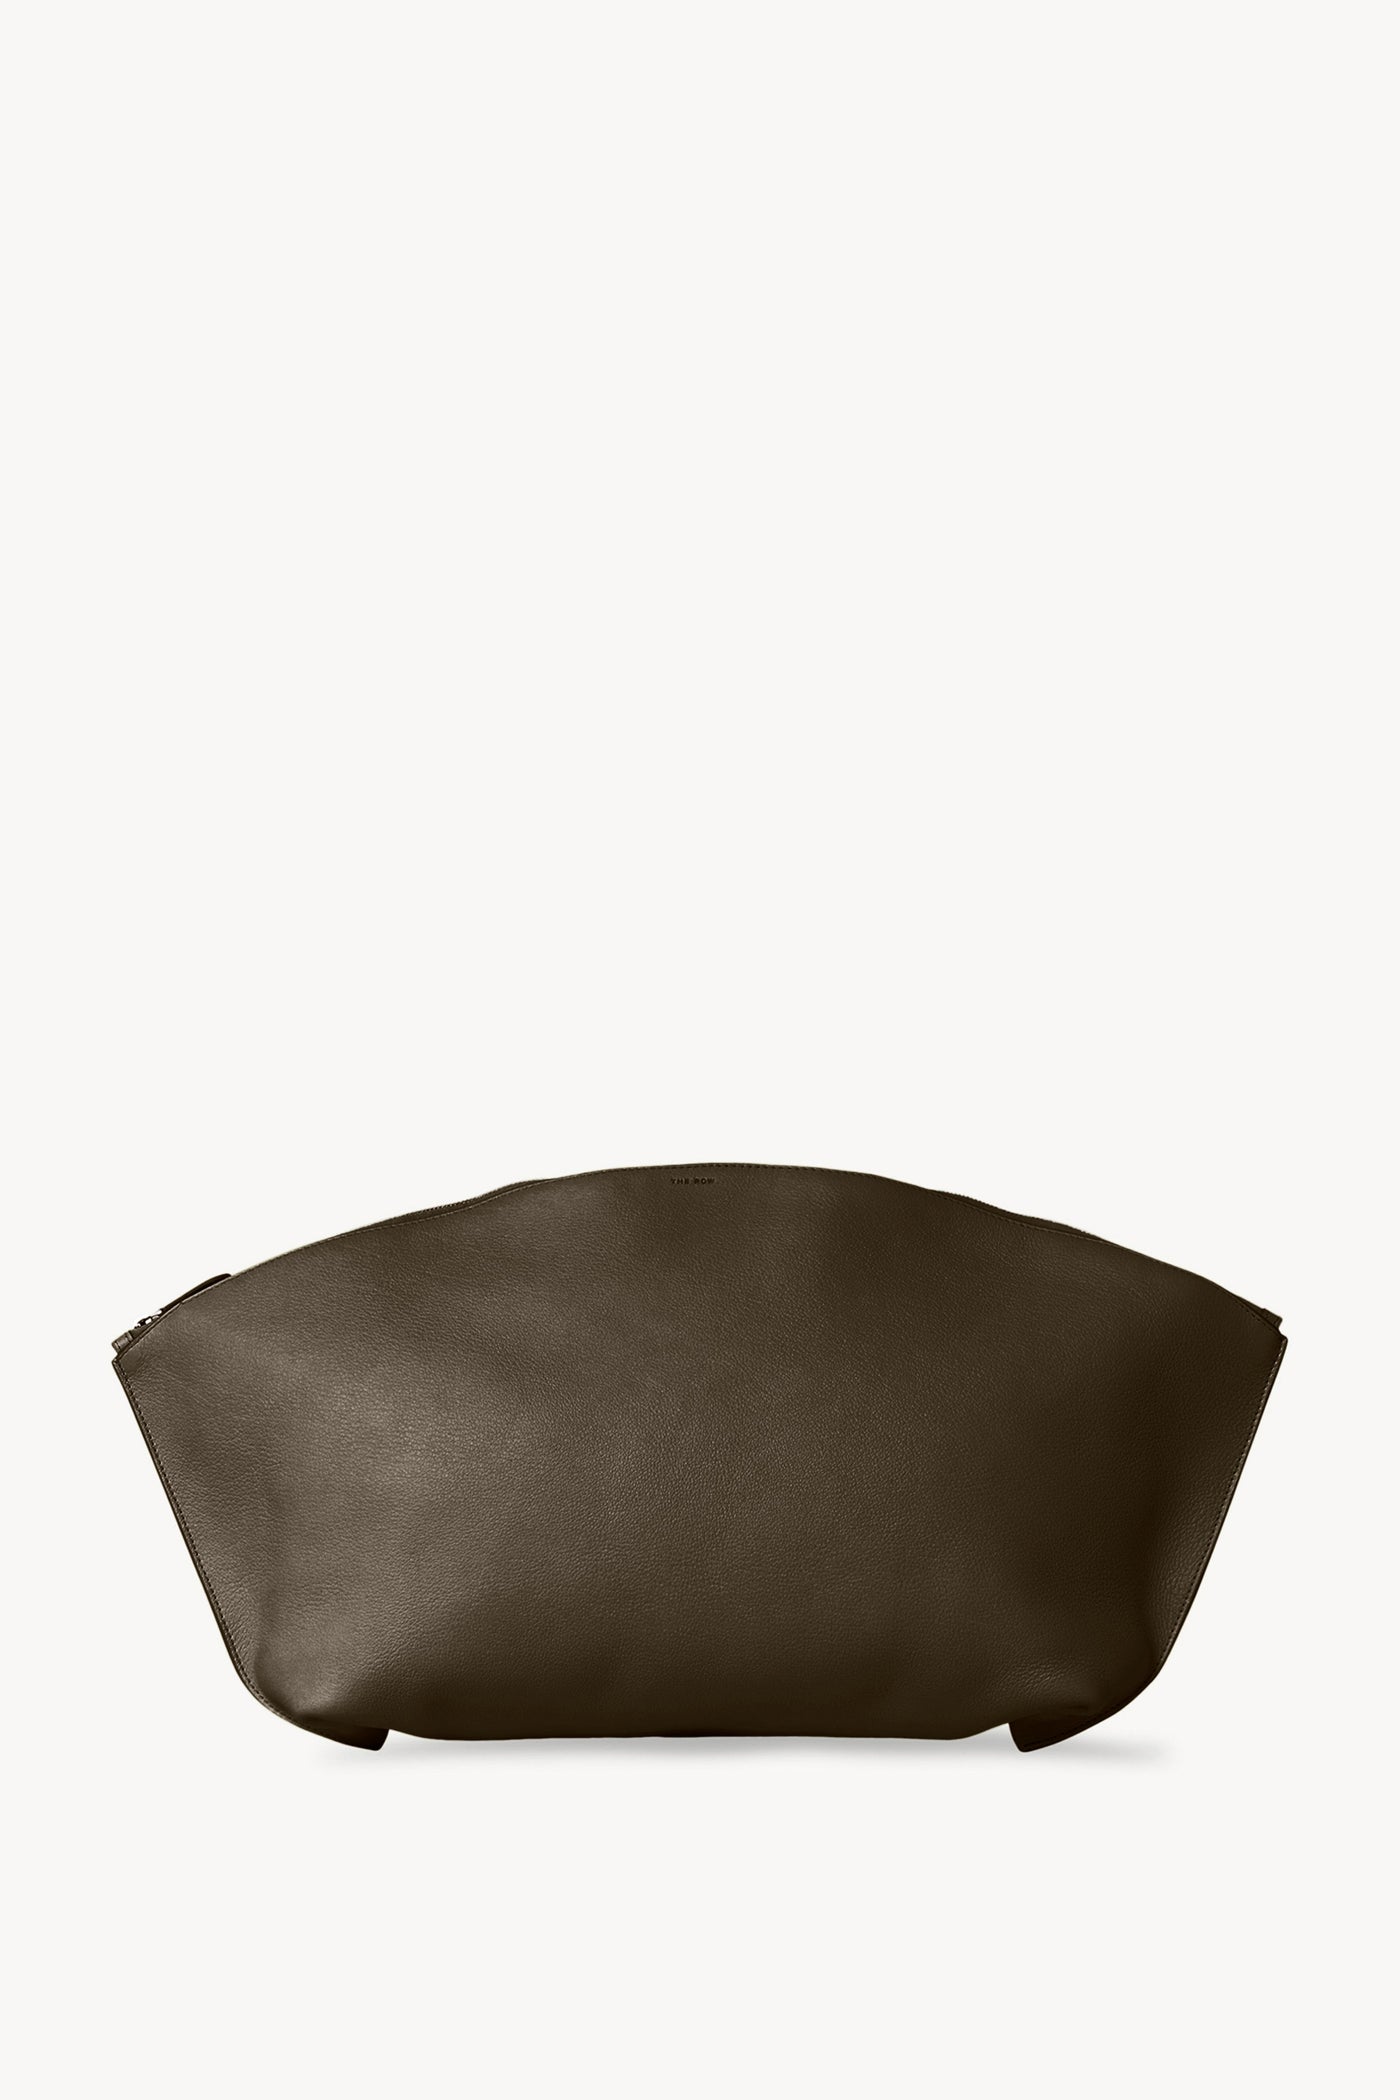 XL Dante Clutch in Olive Leather - The Row - Ileana Makri store